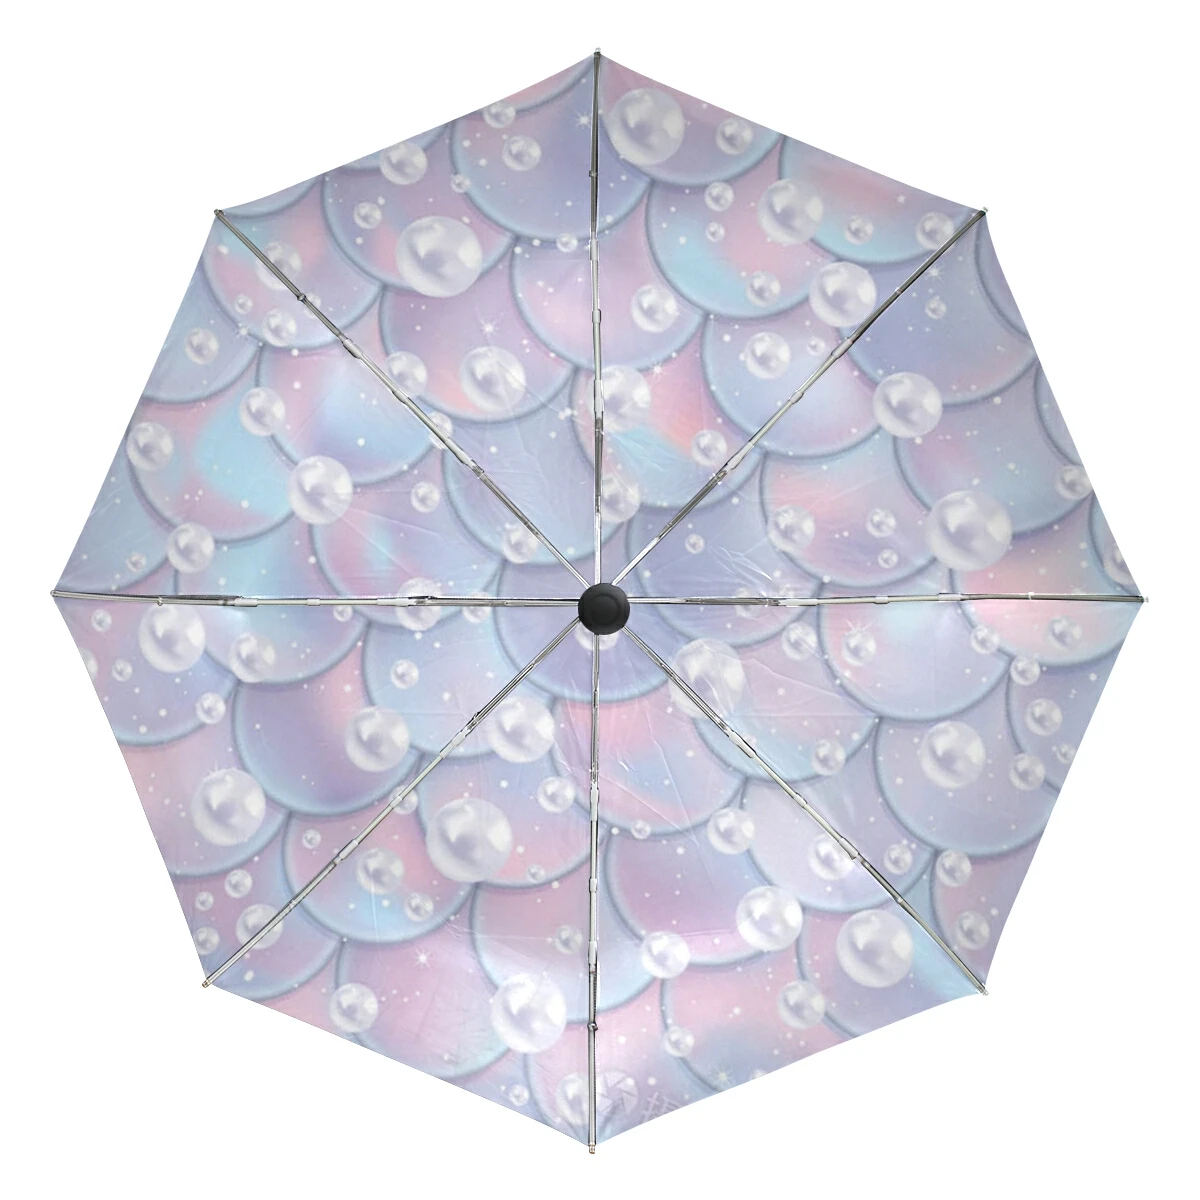 

Custom Umbrella Printing High Quality Anti UV Auto Open And Close Three Fold Umbrella waterproof customs umbrella, Customized color